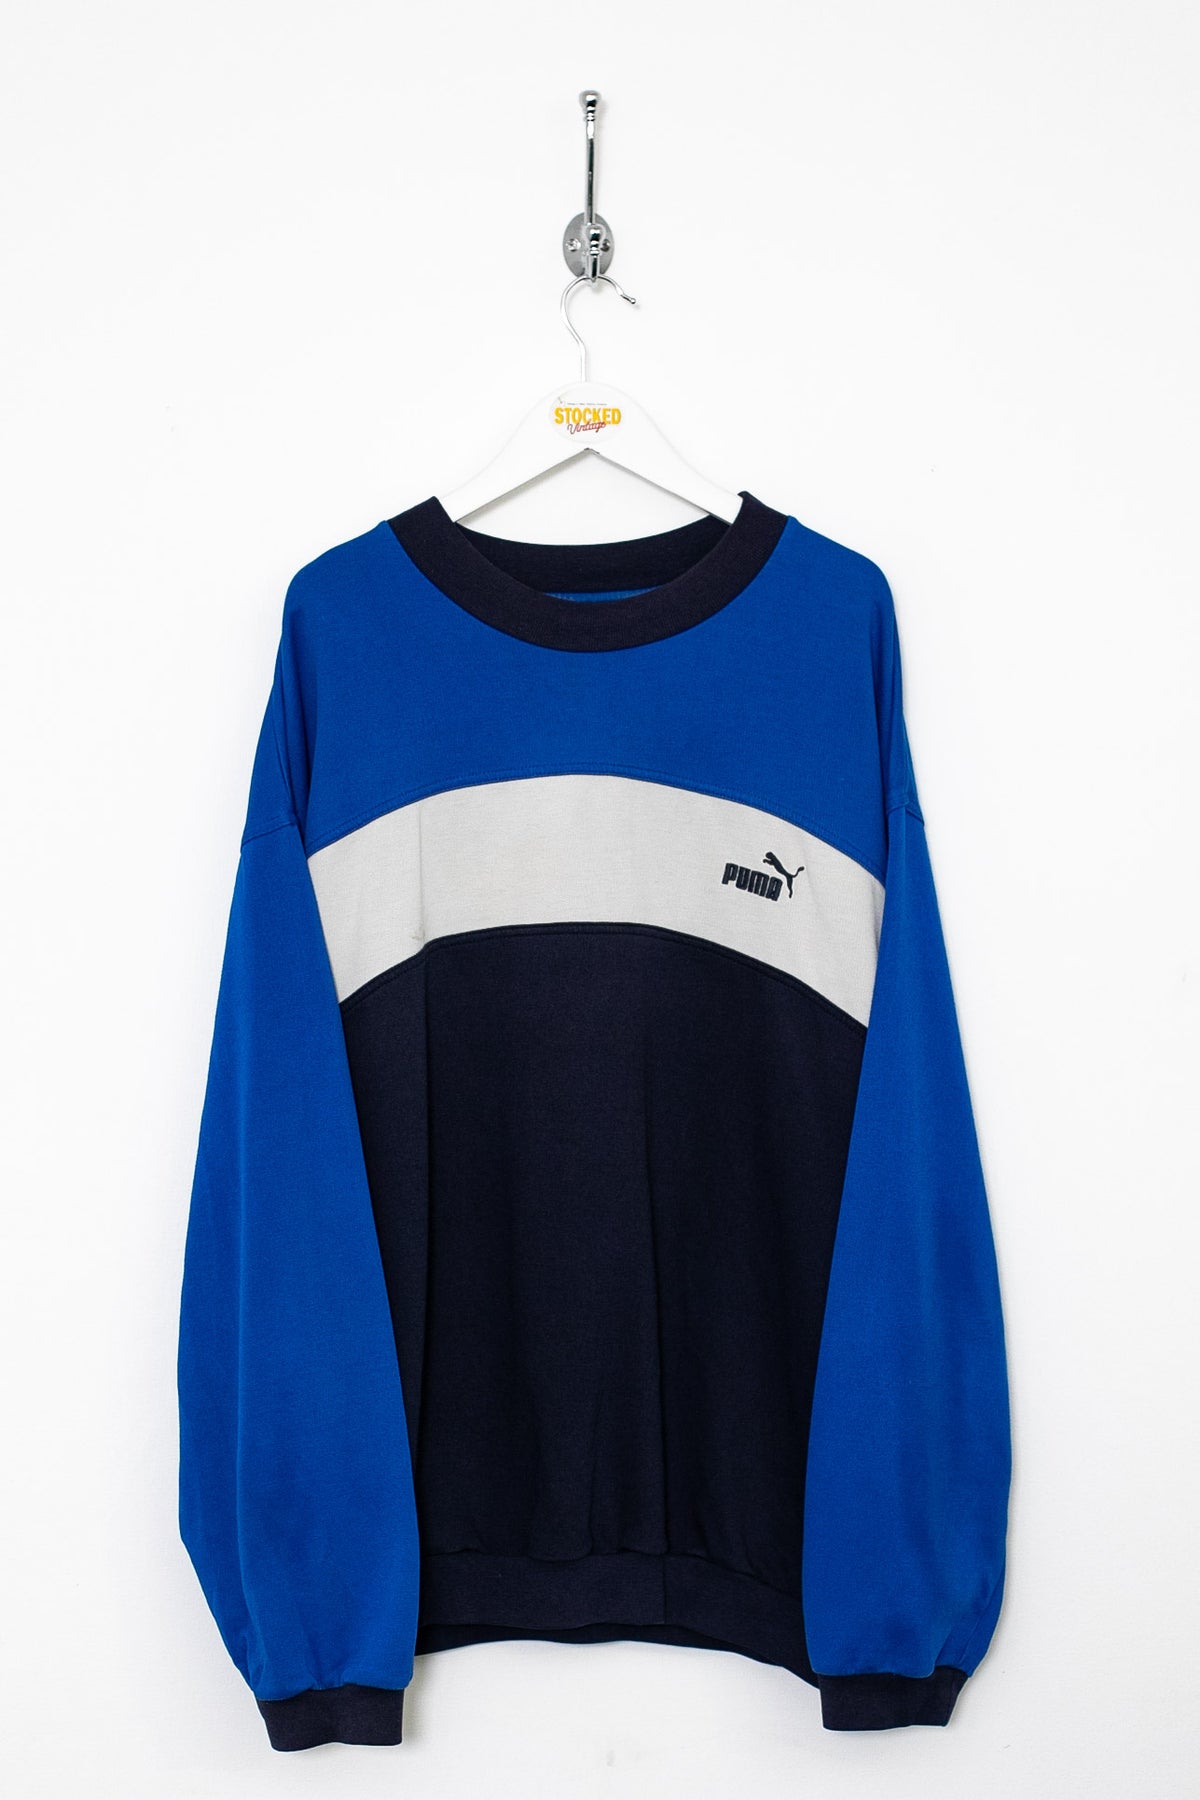 00s Puma Sweatshirt (XL)